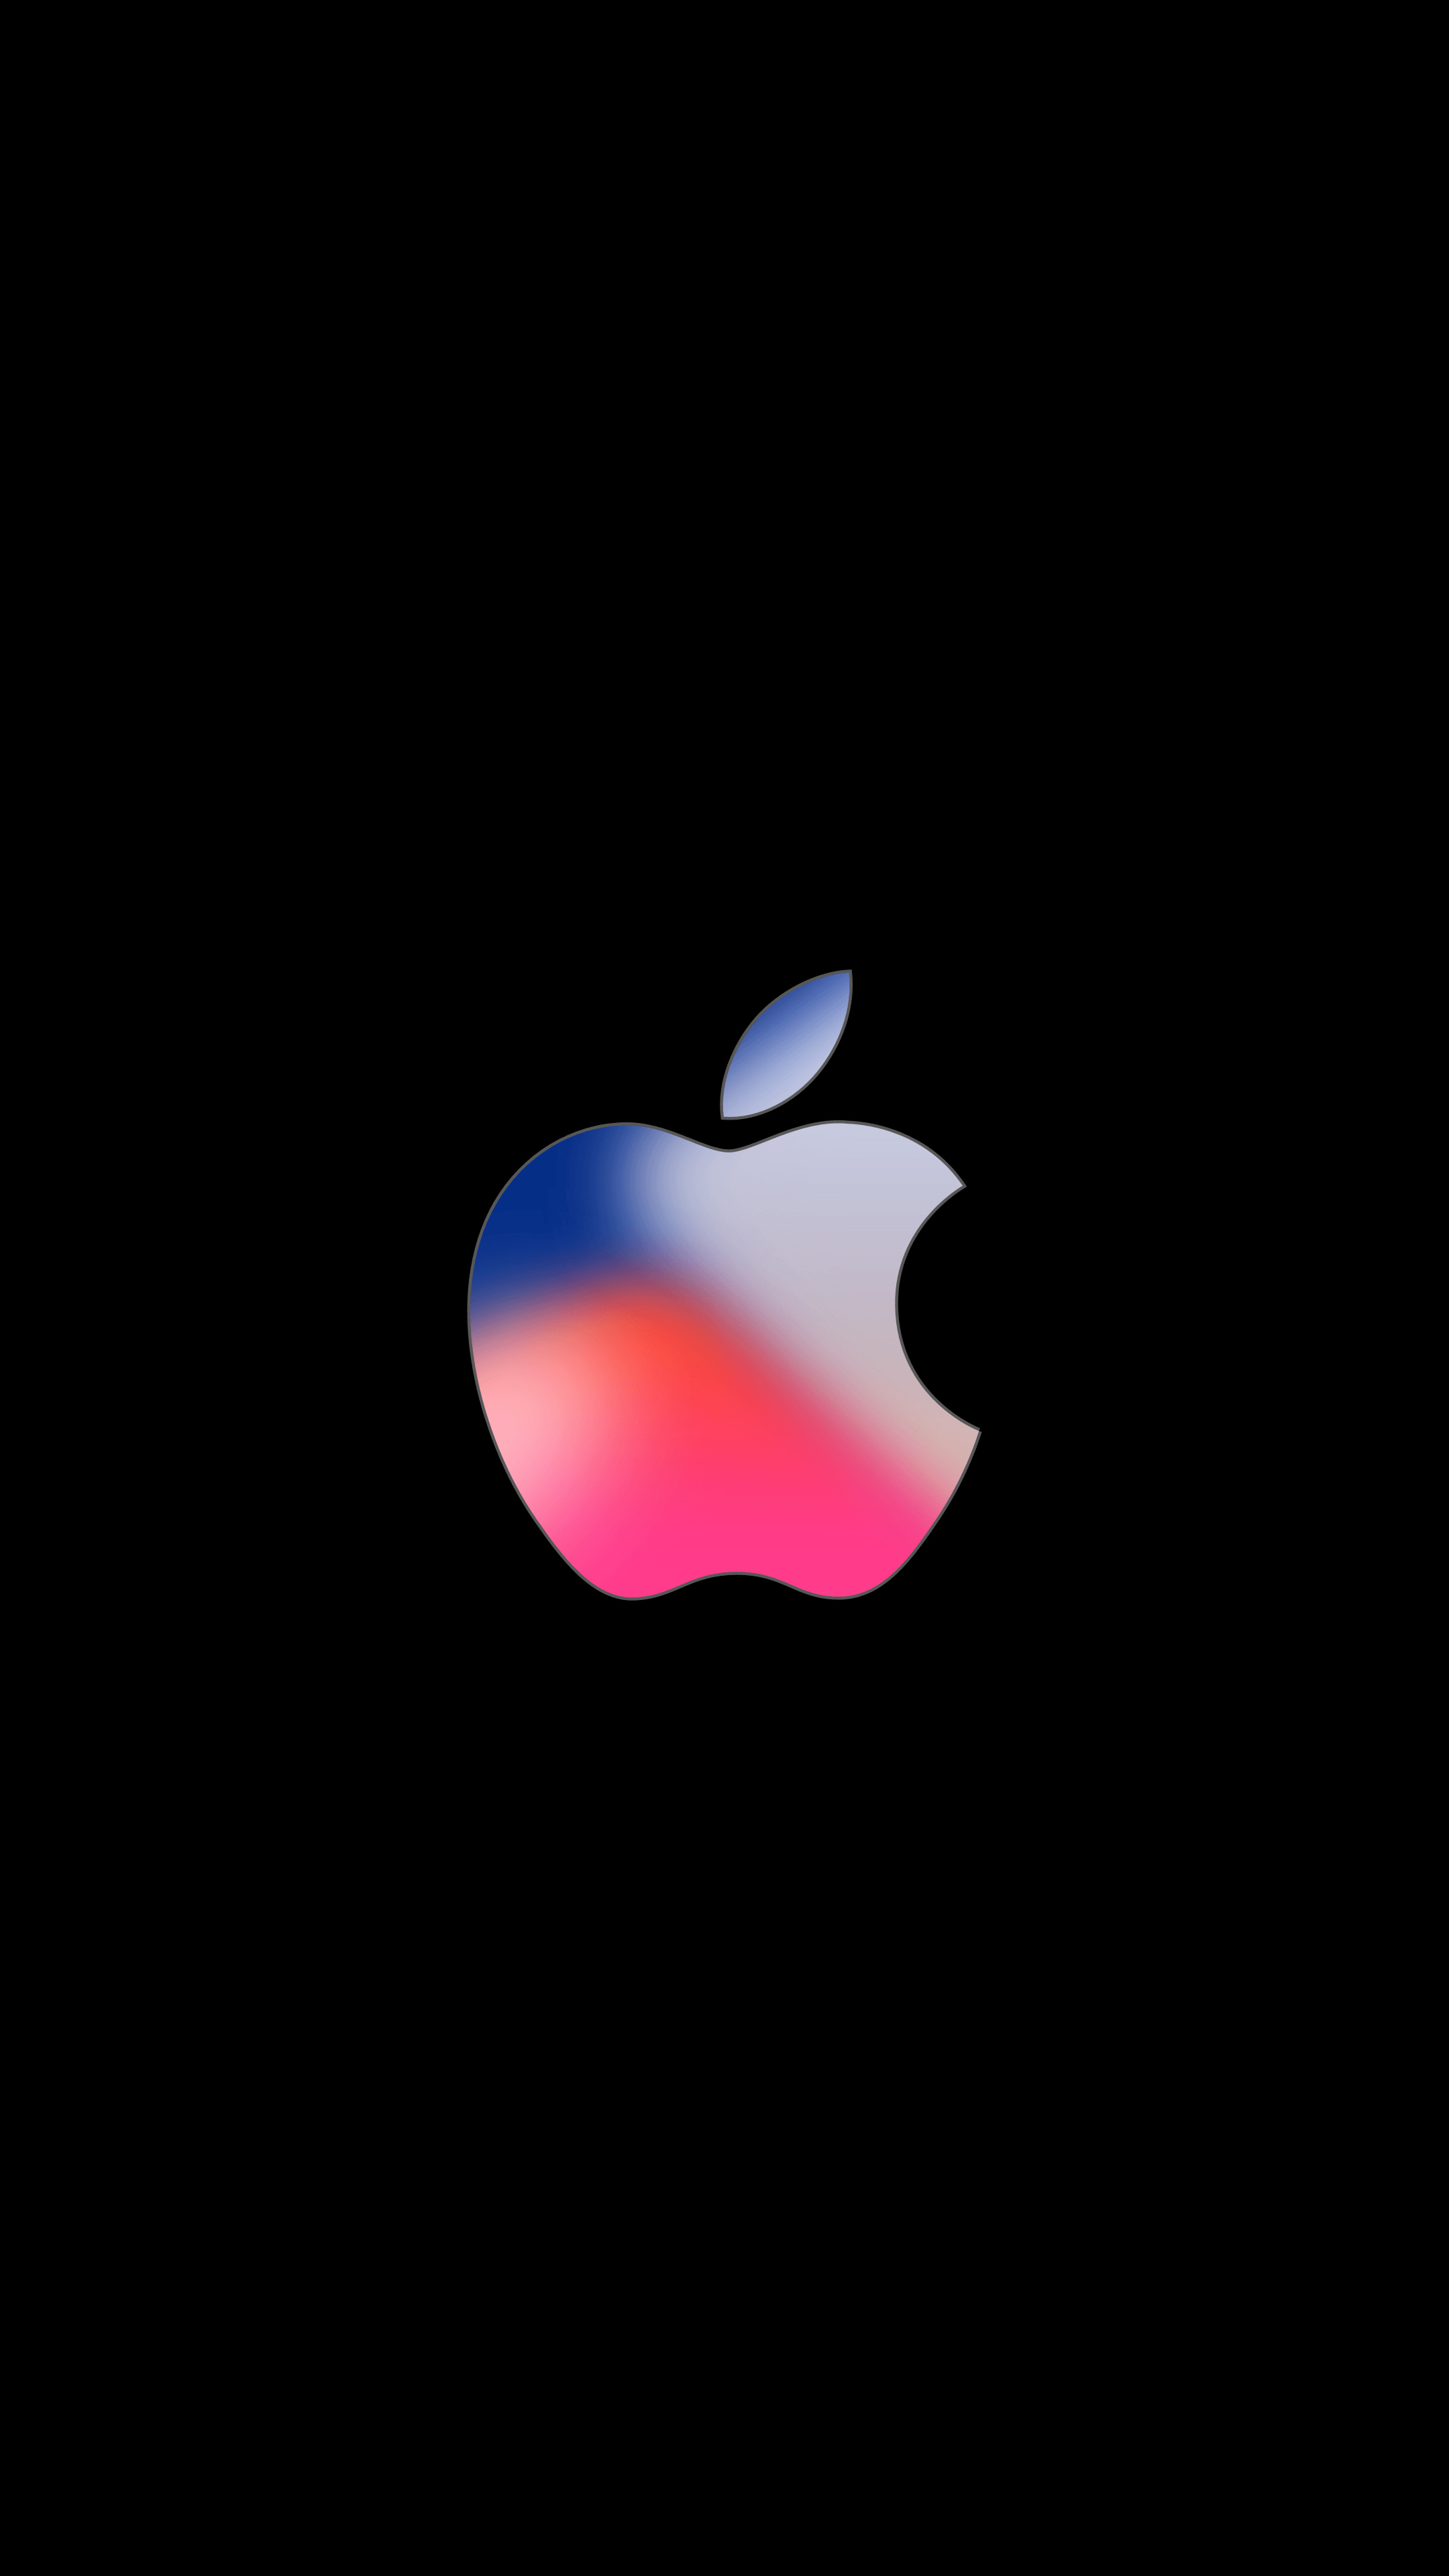 iOS Logo, Iconic brand image, Apple's signature, Tech innovation, 2160x3840 4K Handy